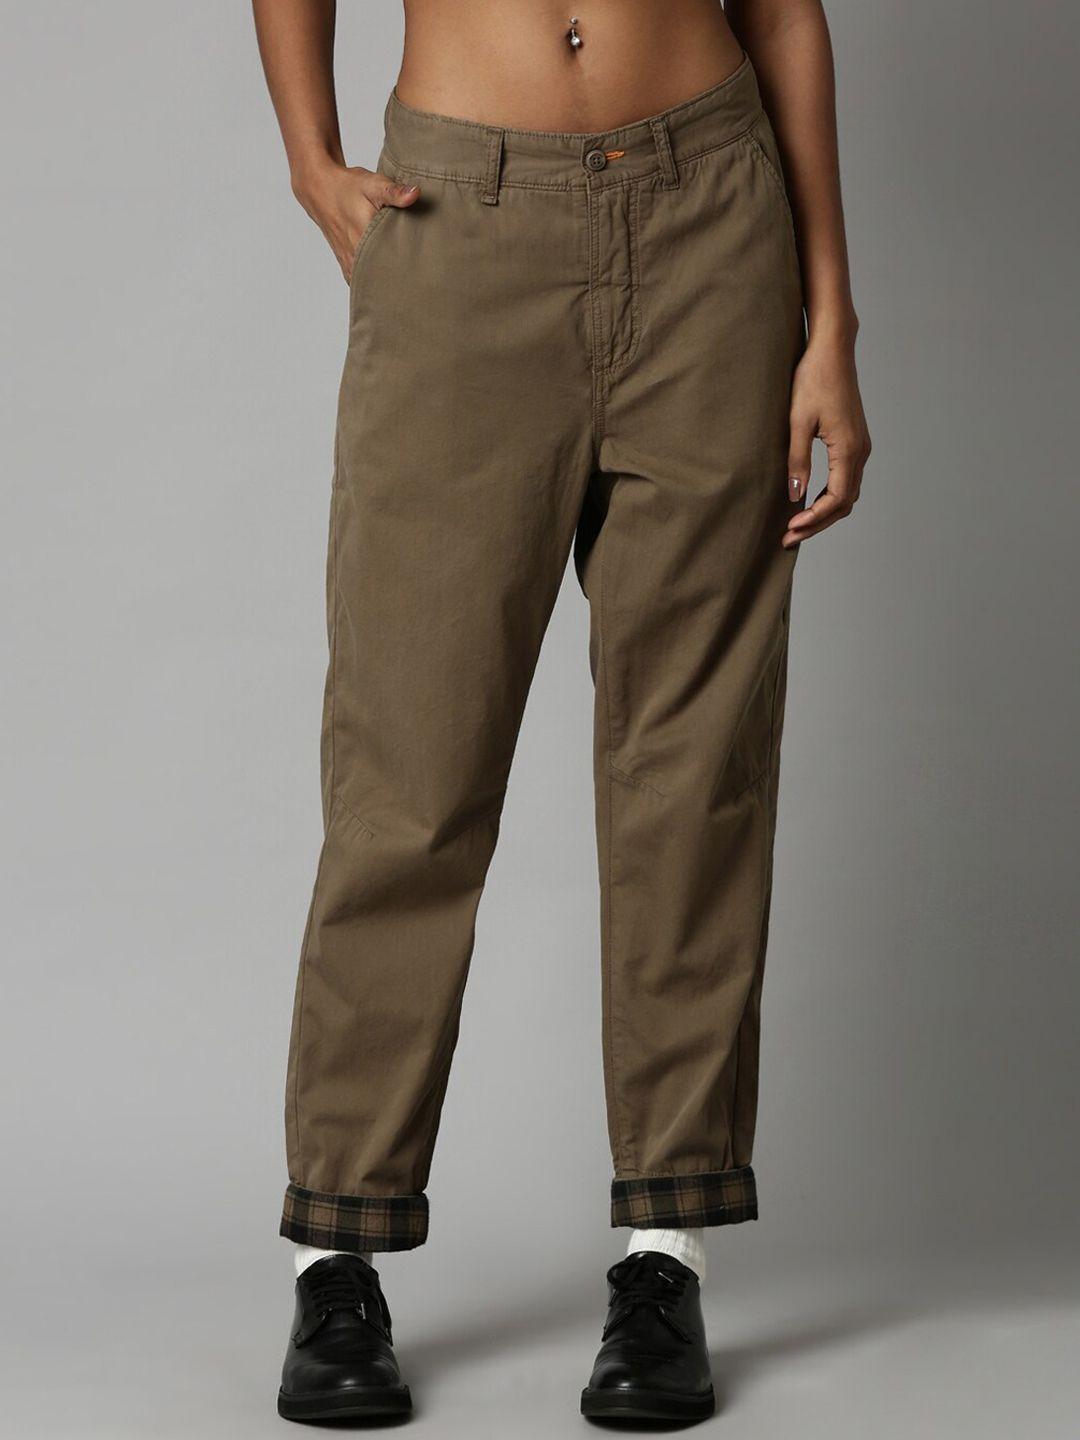 breakbounce-women-regular-fit-mid-rise-cotton-comfort-trousers